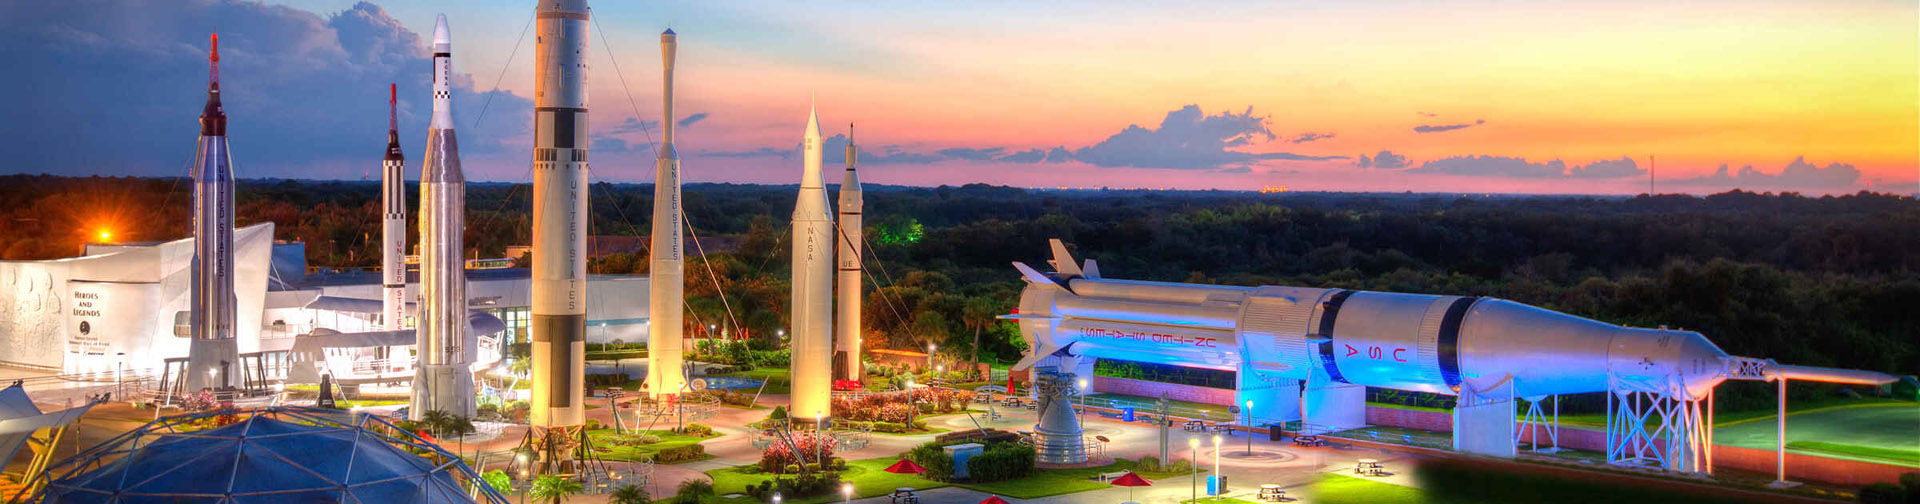 Rockets Garden - Kennedy Space Center